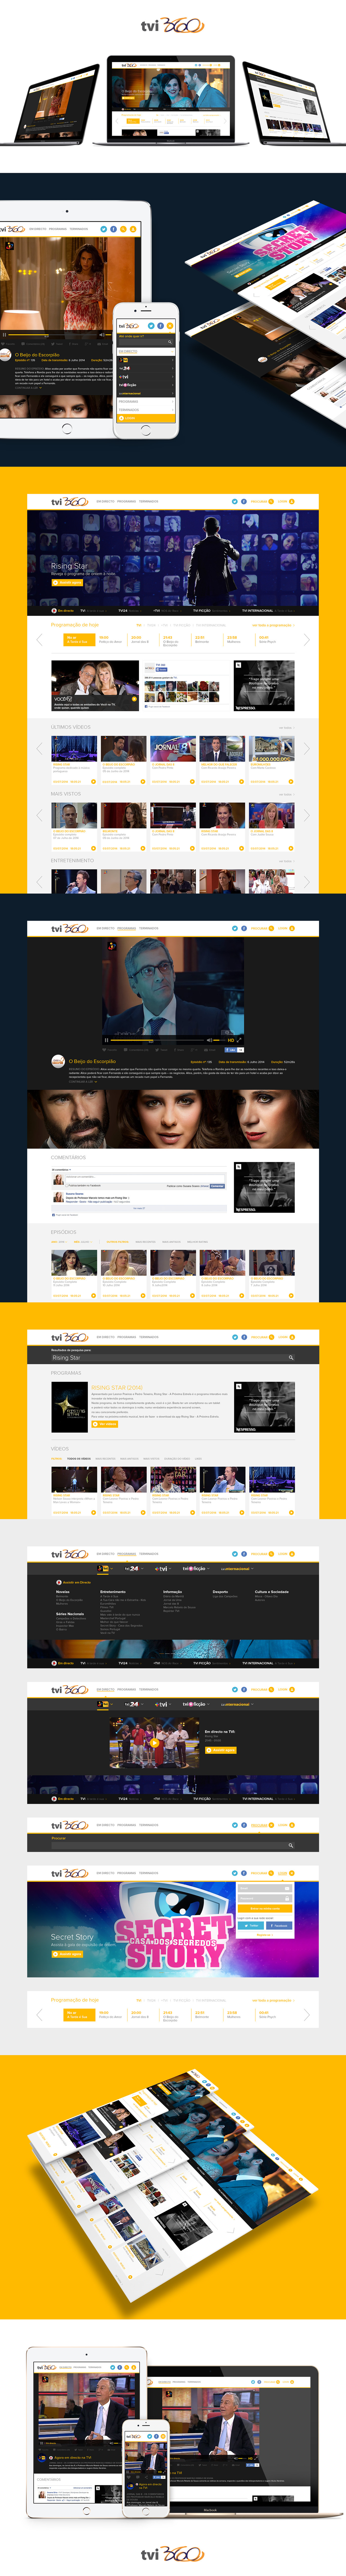 Website Responsive VOD player tvi Portugal video on demand Media Capital flat design Webdesign Mockup free psd